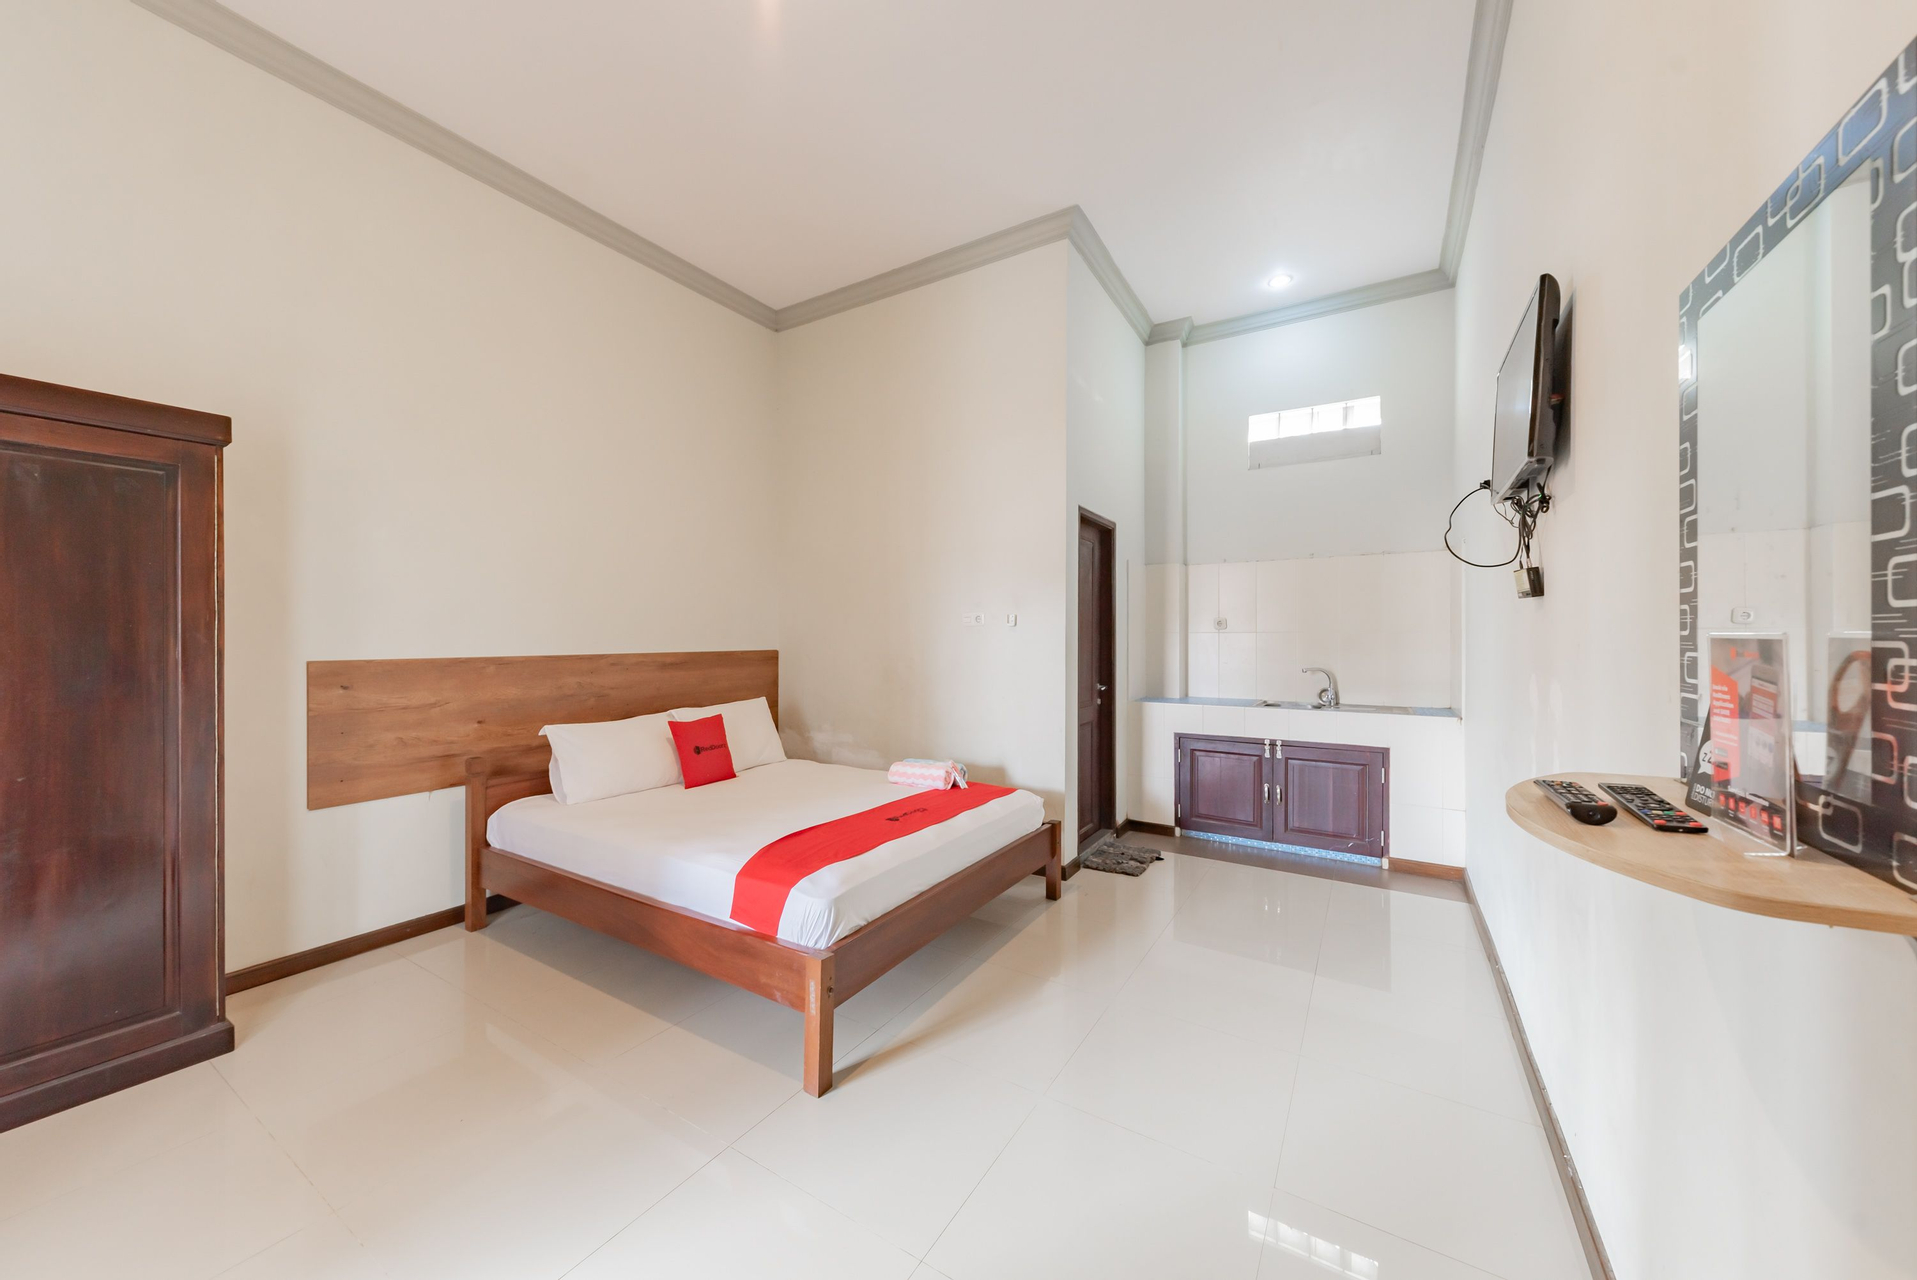 Bedroom 1, RedDoorz near GOR Sempaja Samarinda, Samarinda